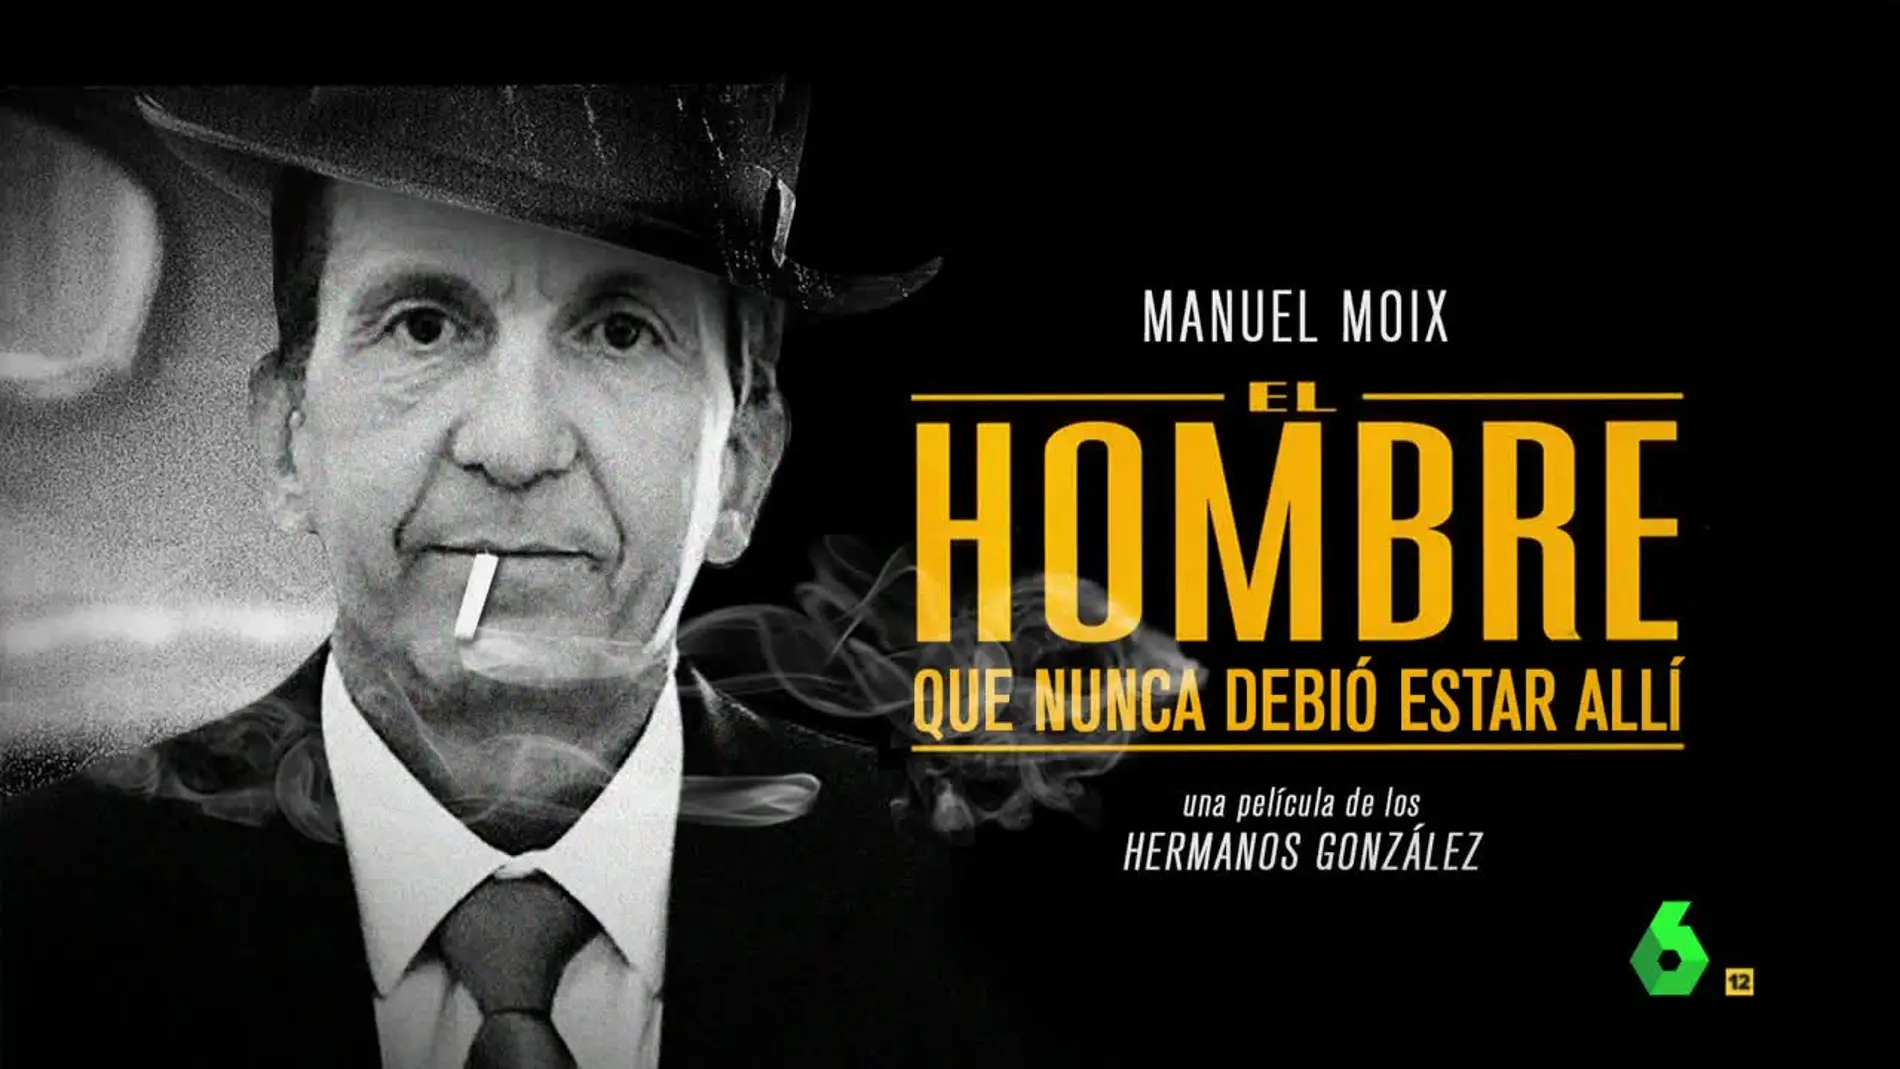 Manuel Moix